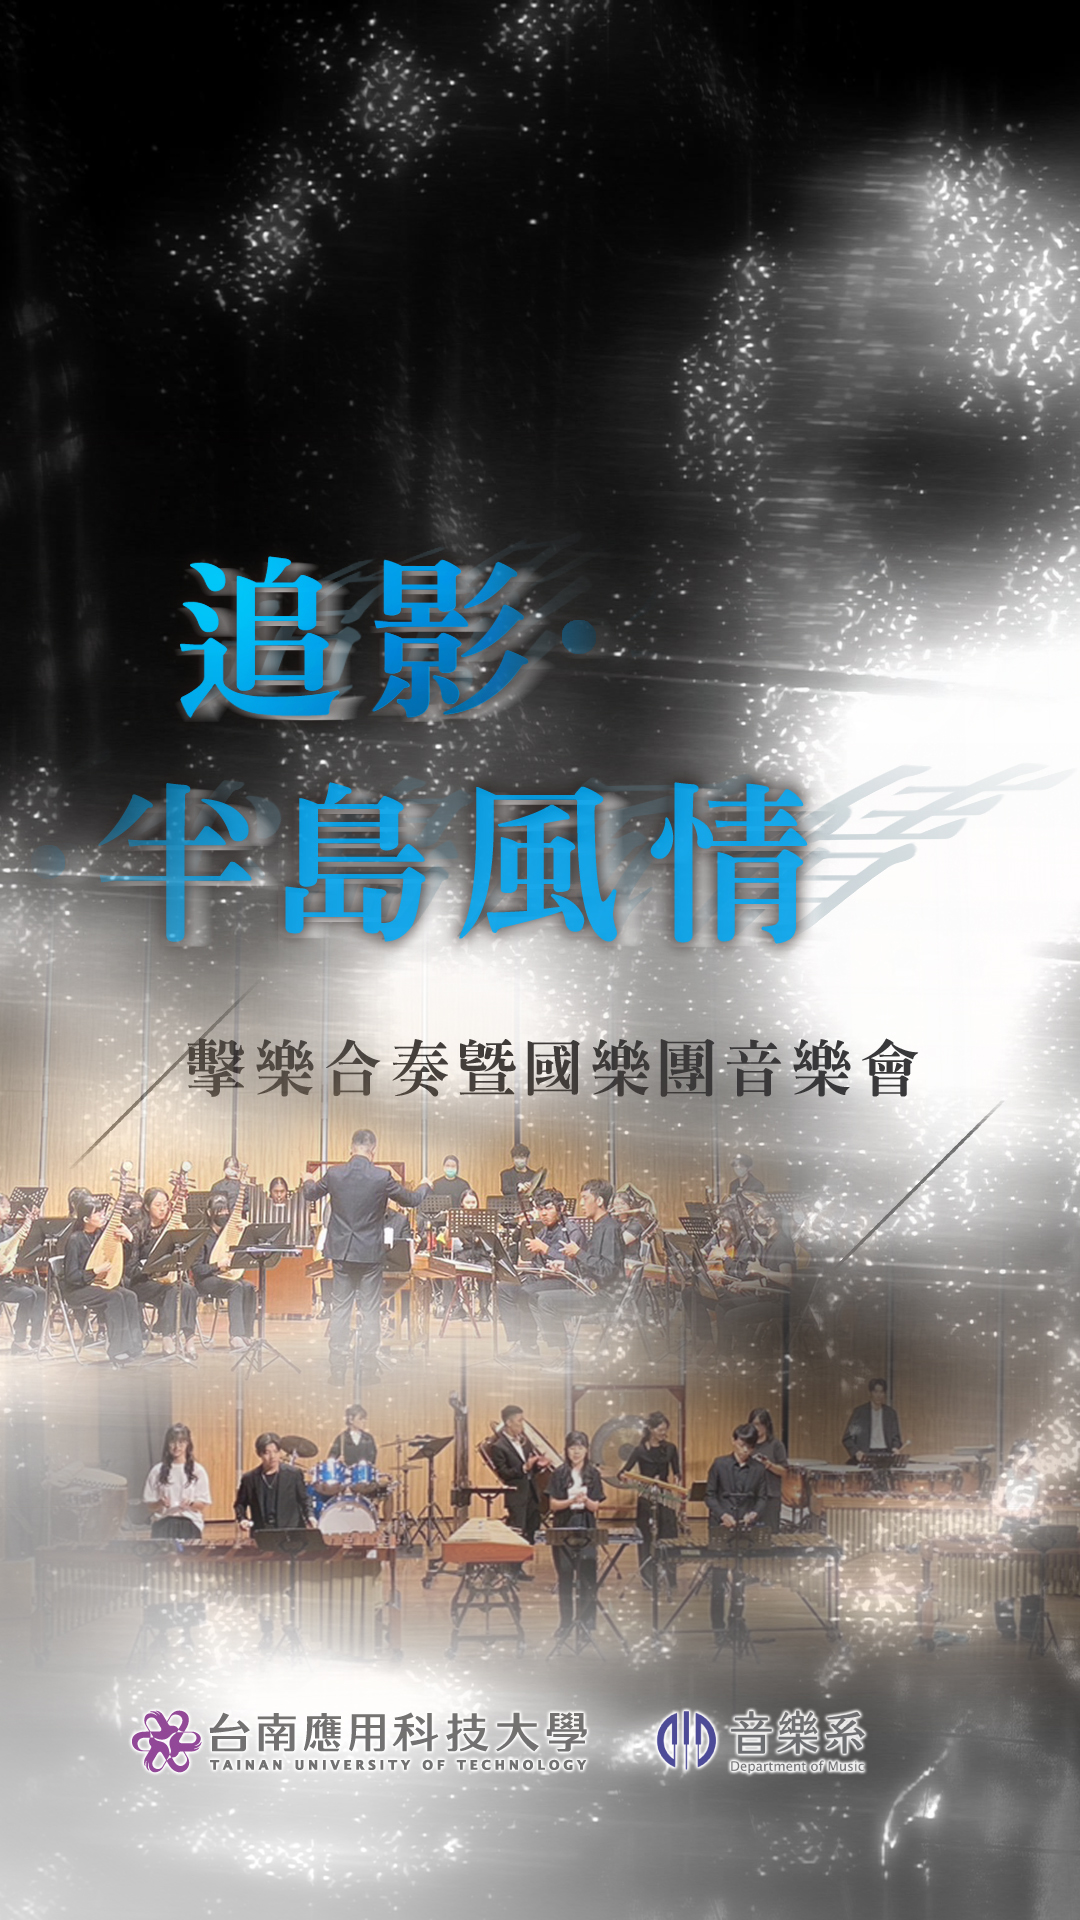 Department of Music, Tainan University of Technology